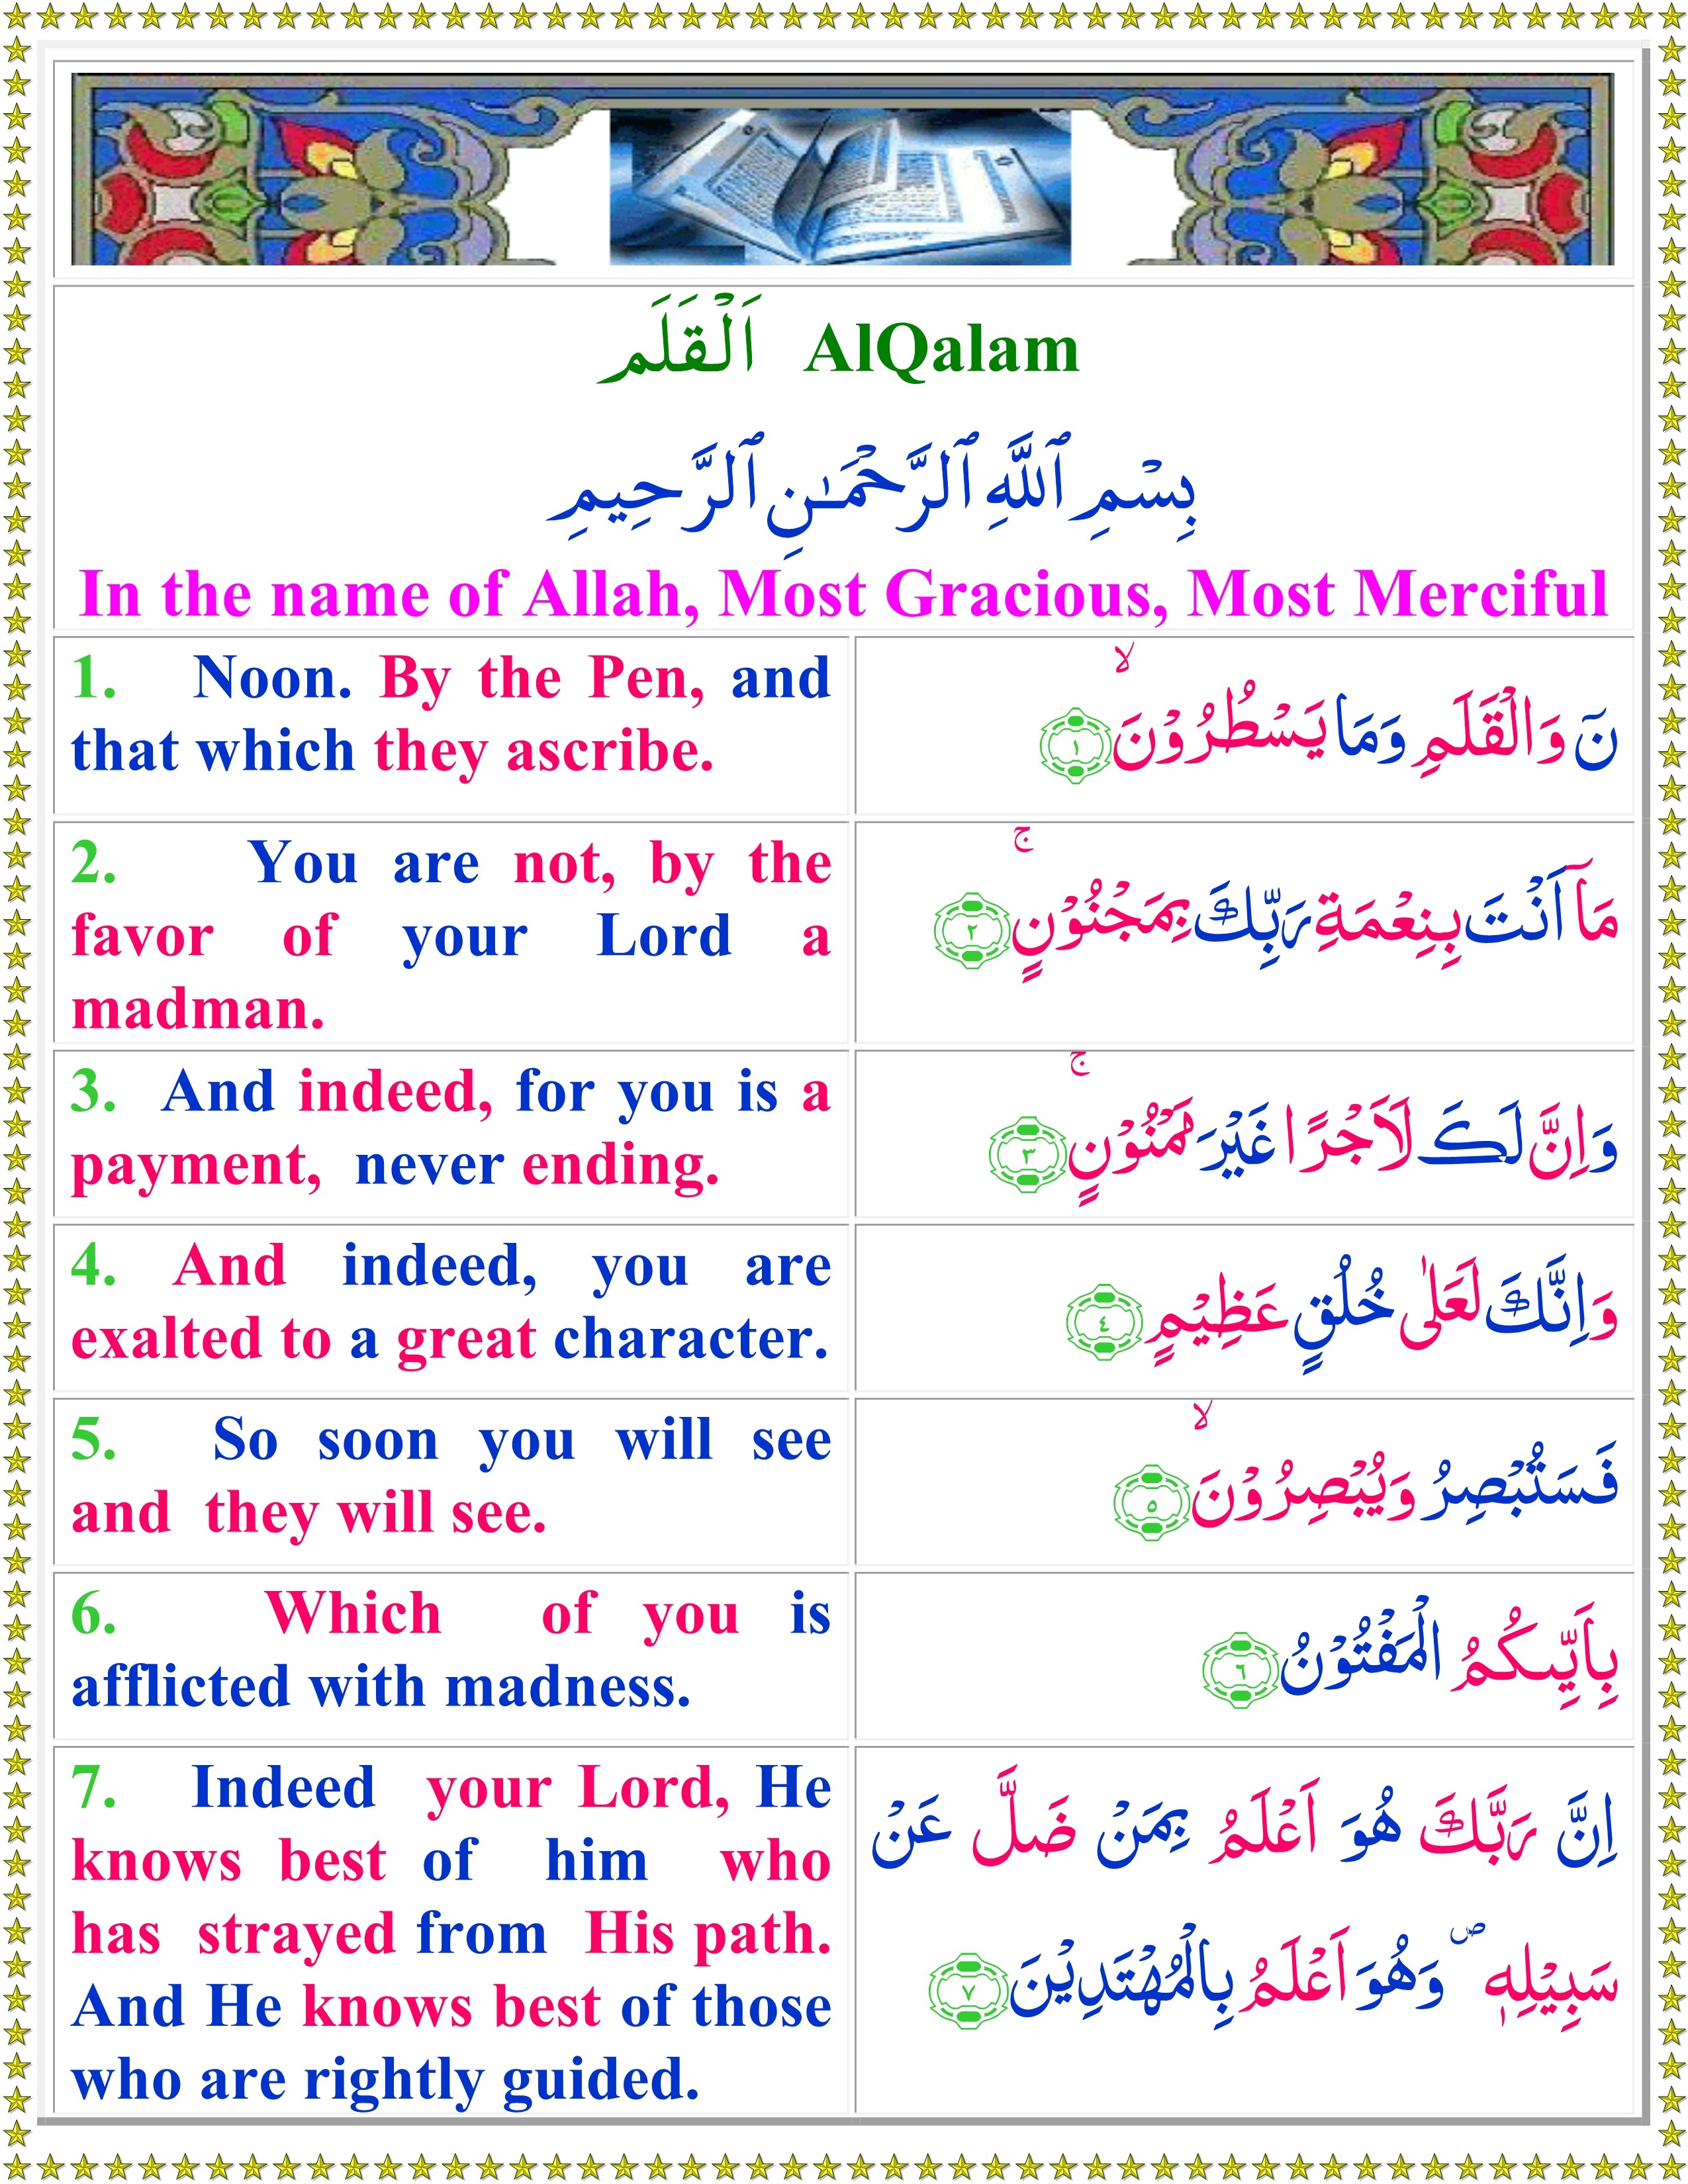 Read Surah Al Qalam With English Translation - Quran o Sunnat